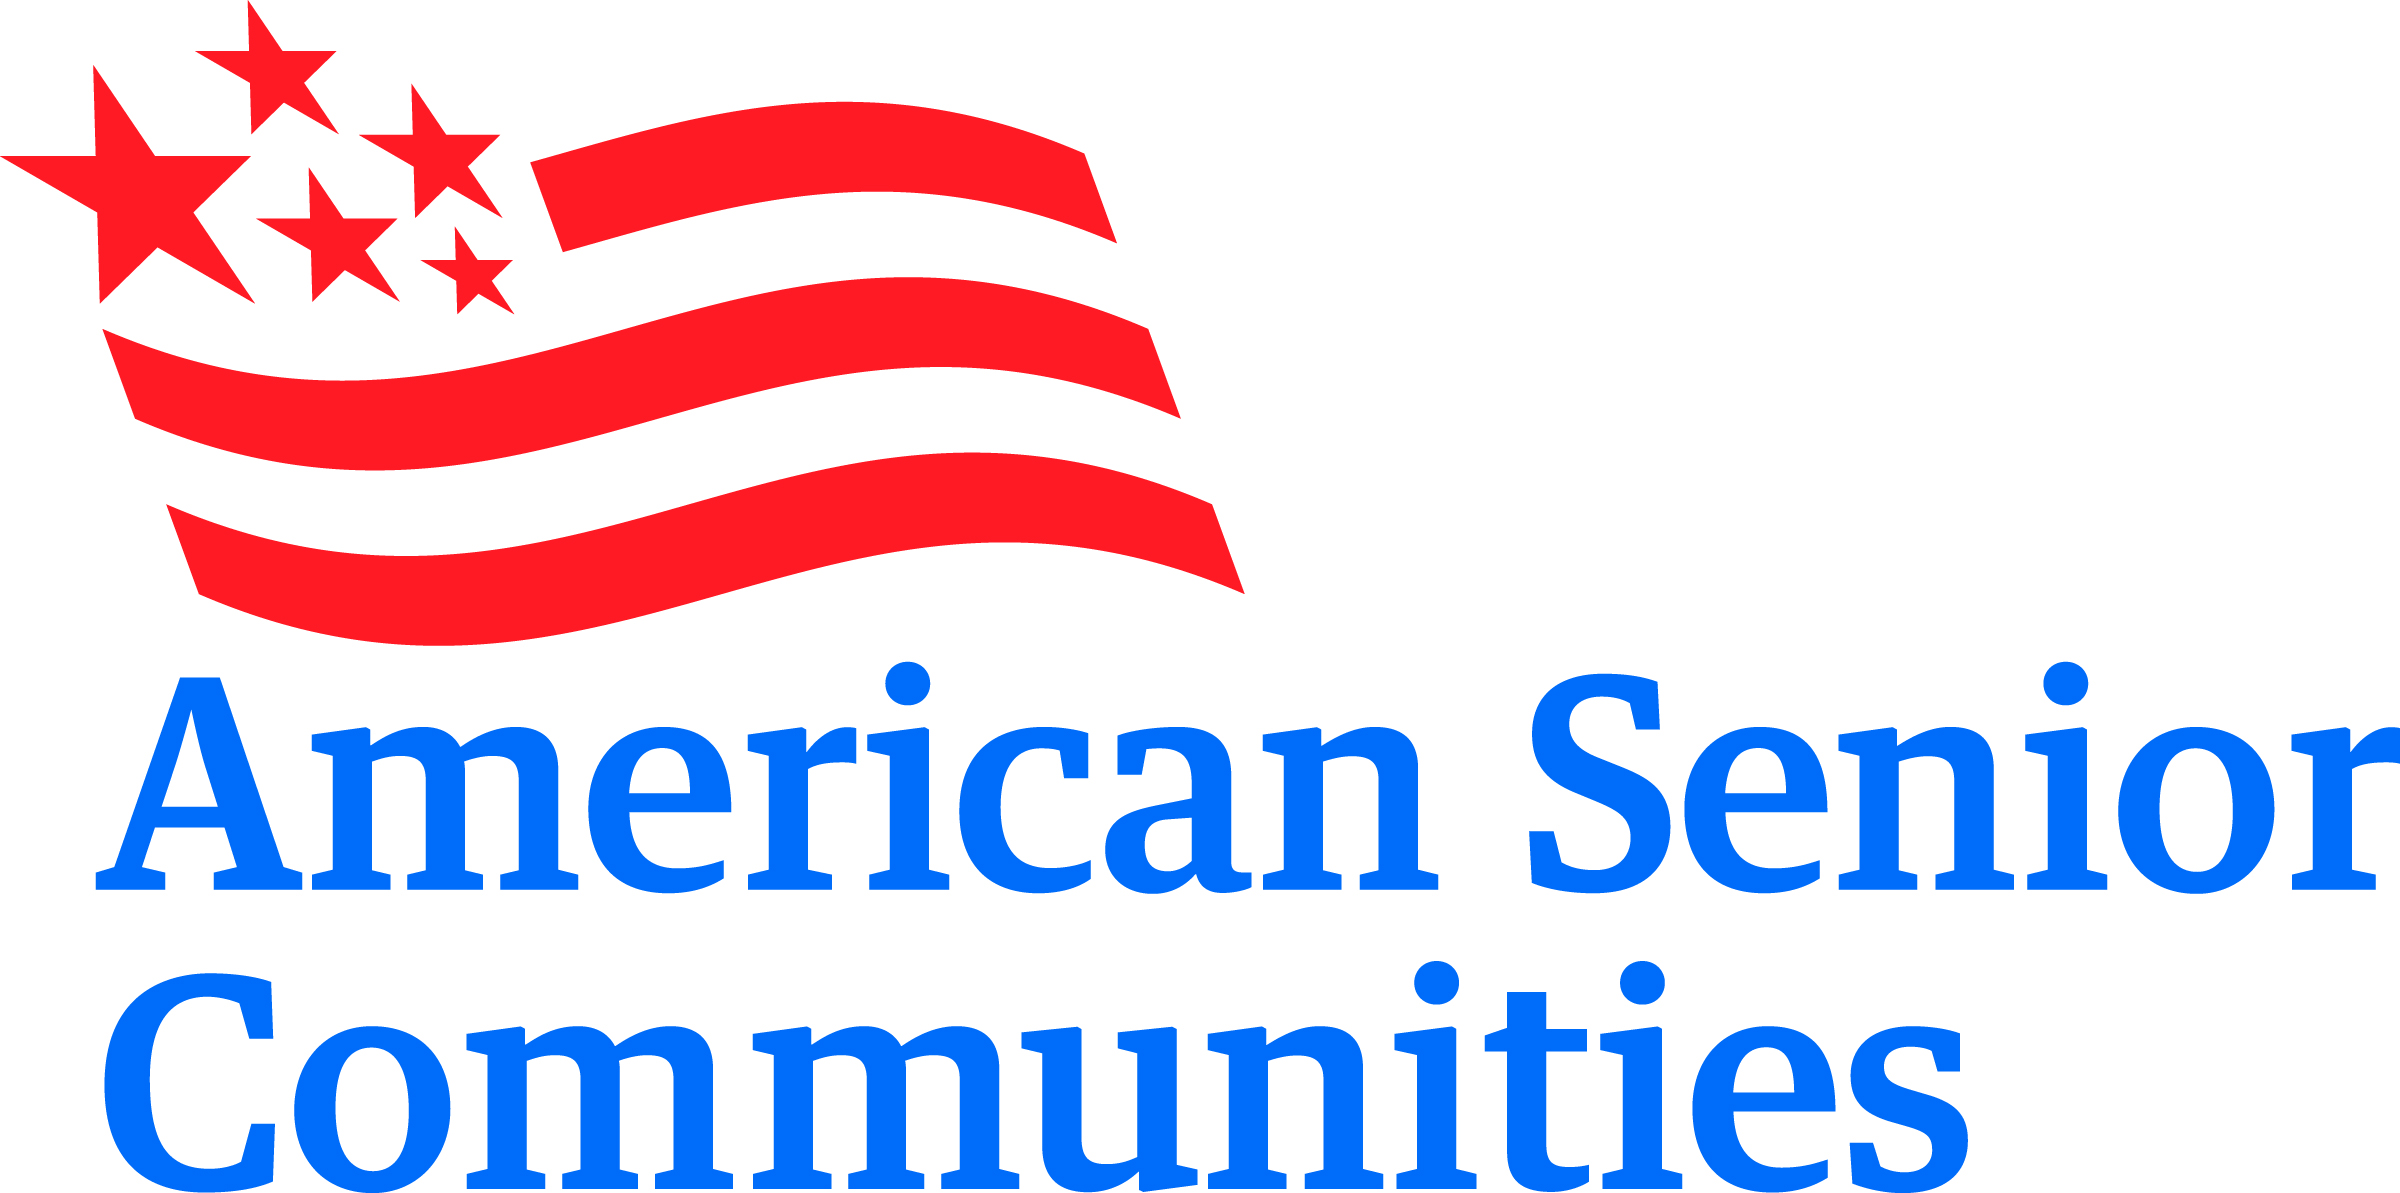 L. Comunidades estadounidenses para personas mayores (Nivel 4)